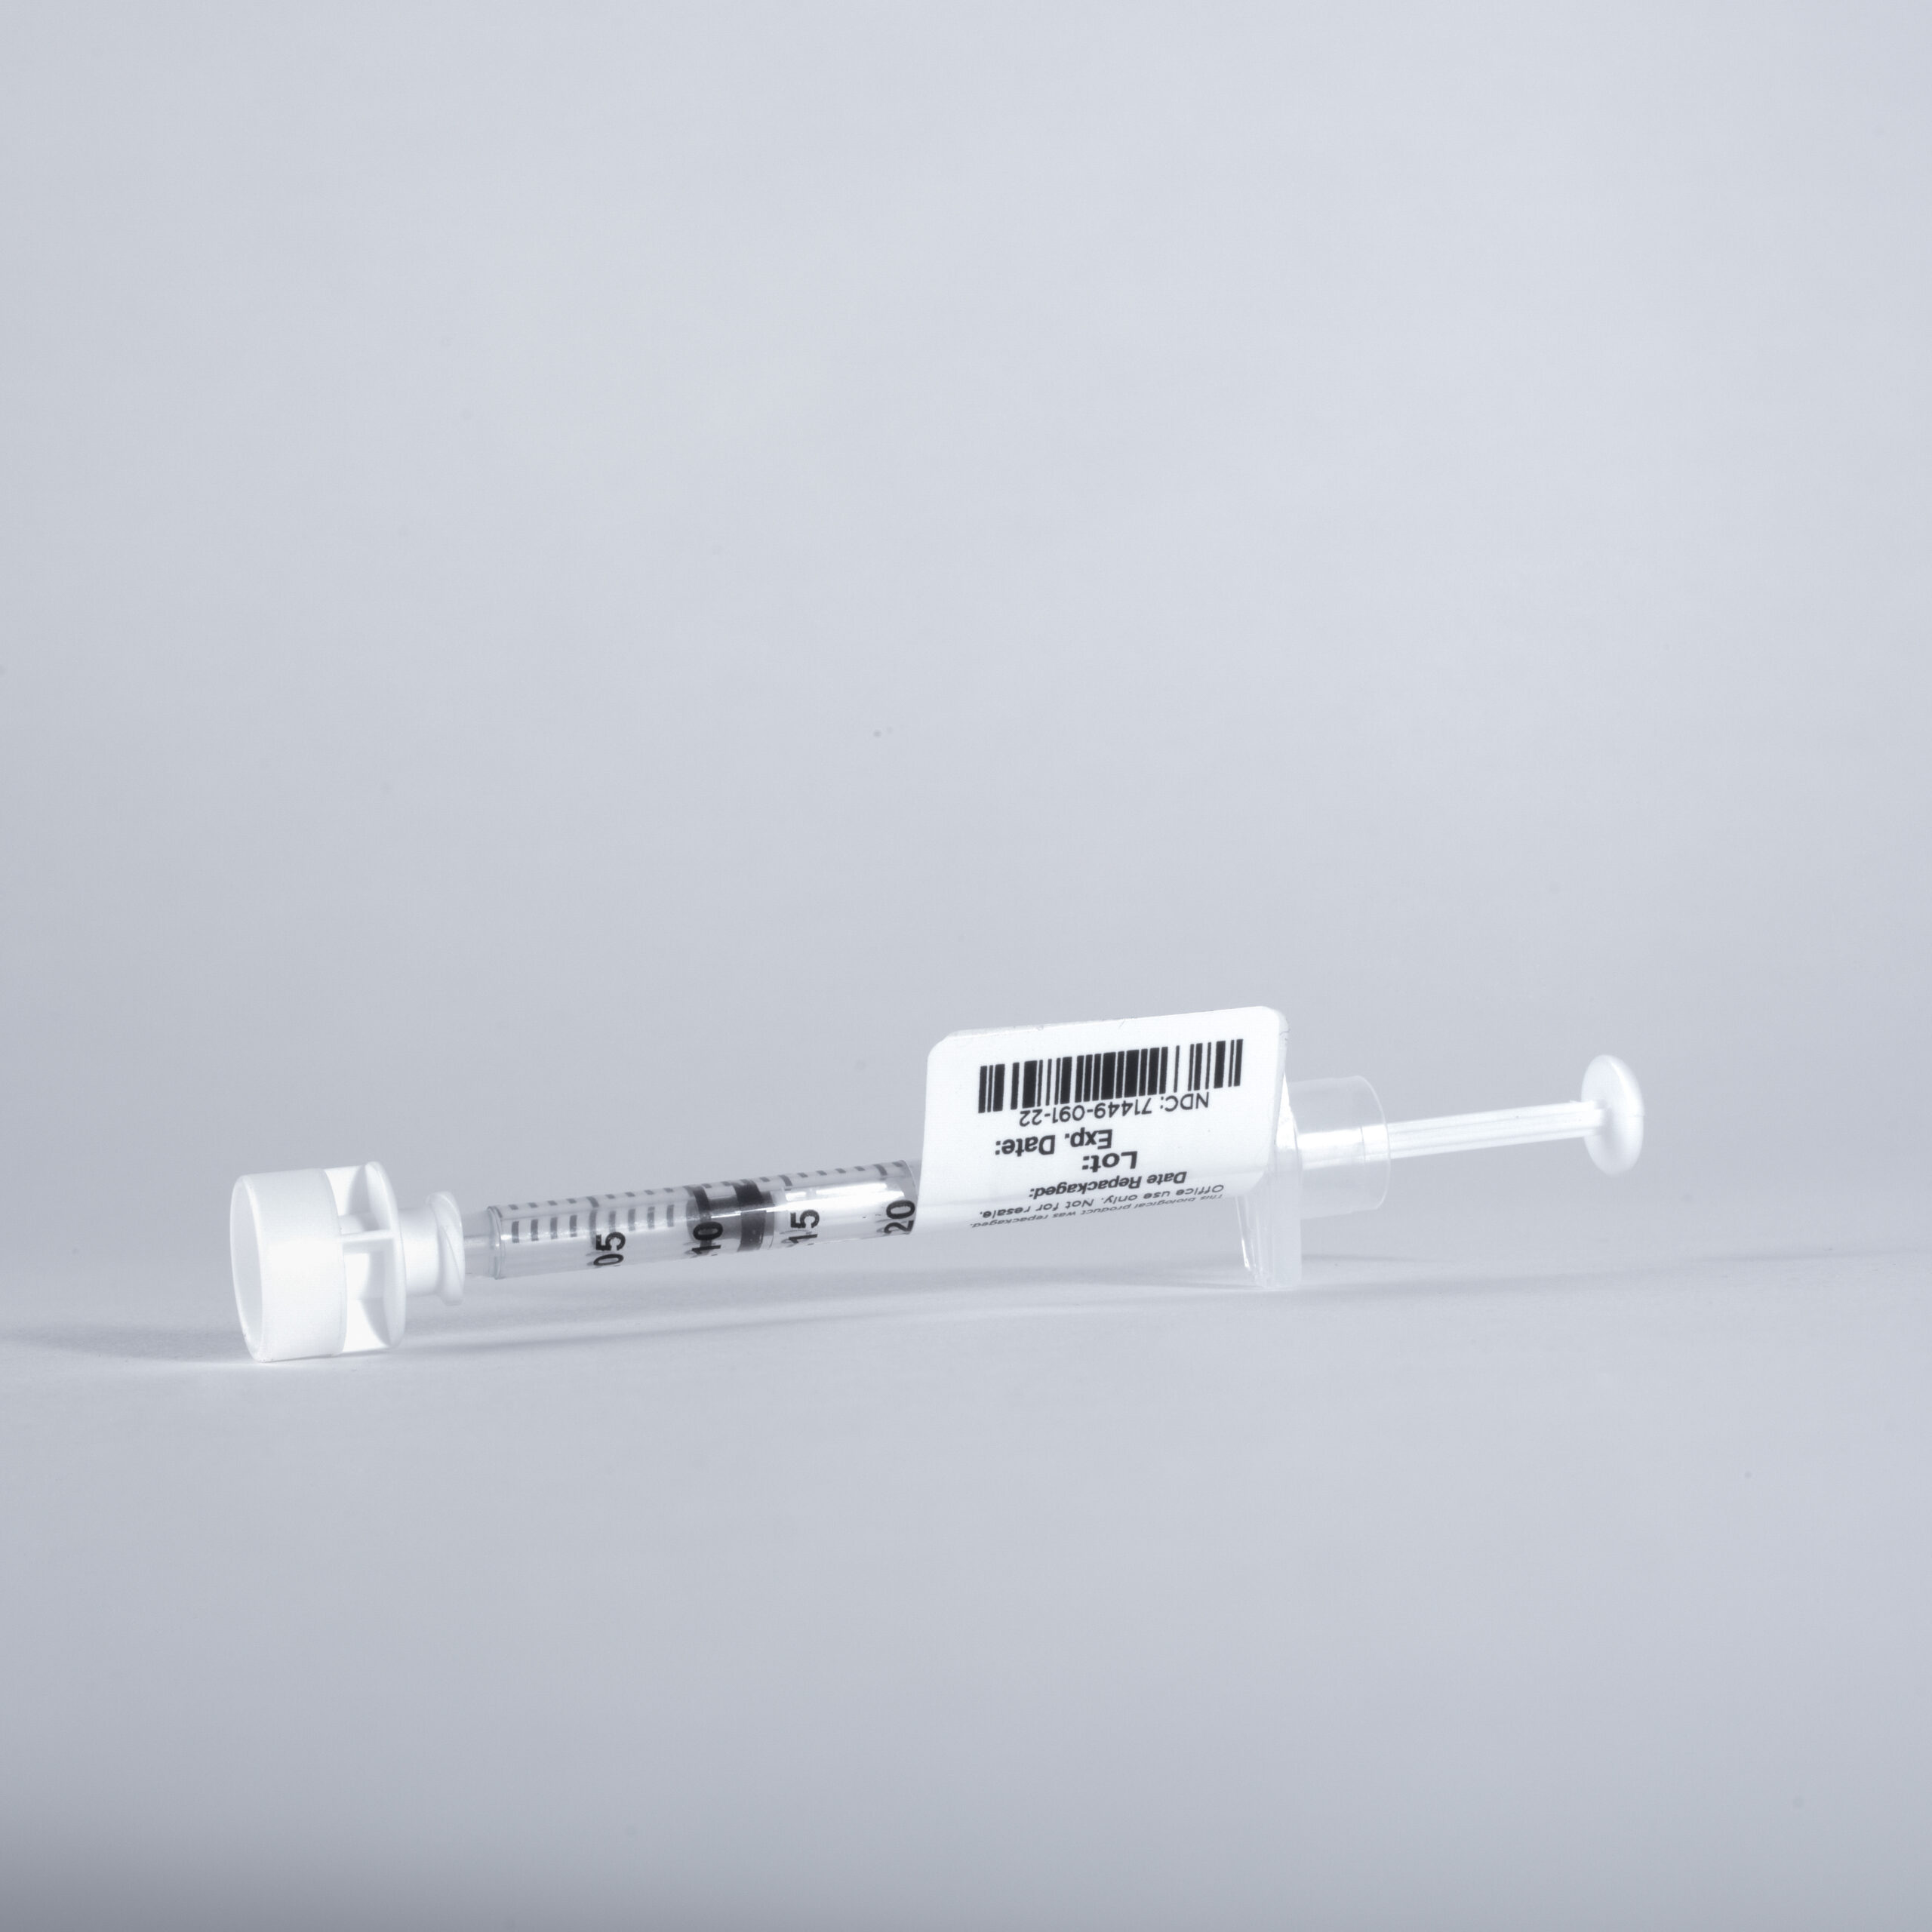 Bevacizumab (Avastin®) 2.75 mg/0.11 mL, repackaged in a 0.25 mL Syringe